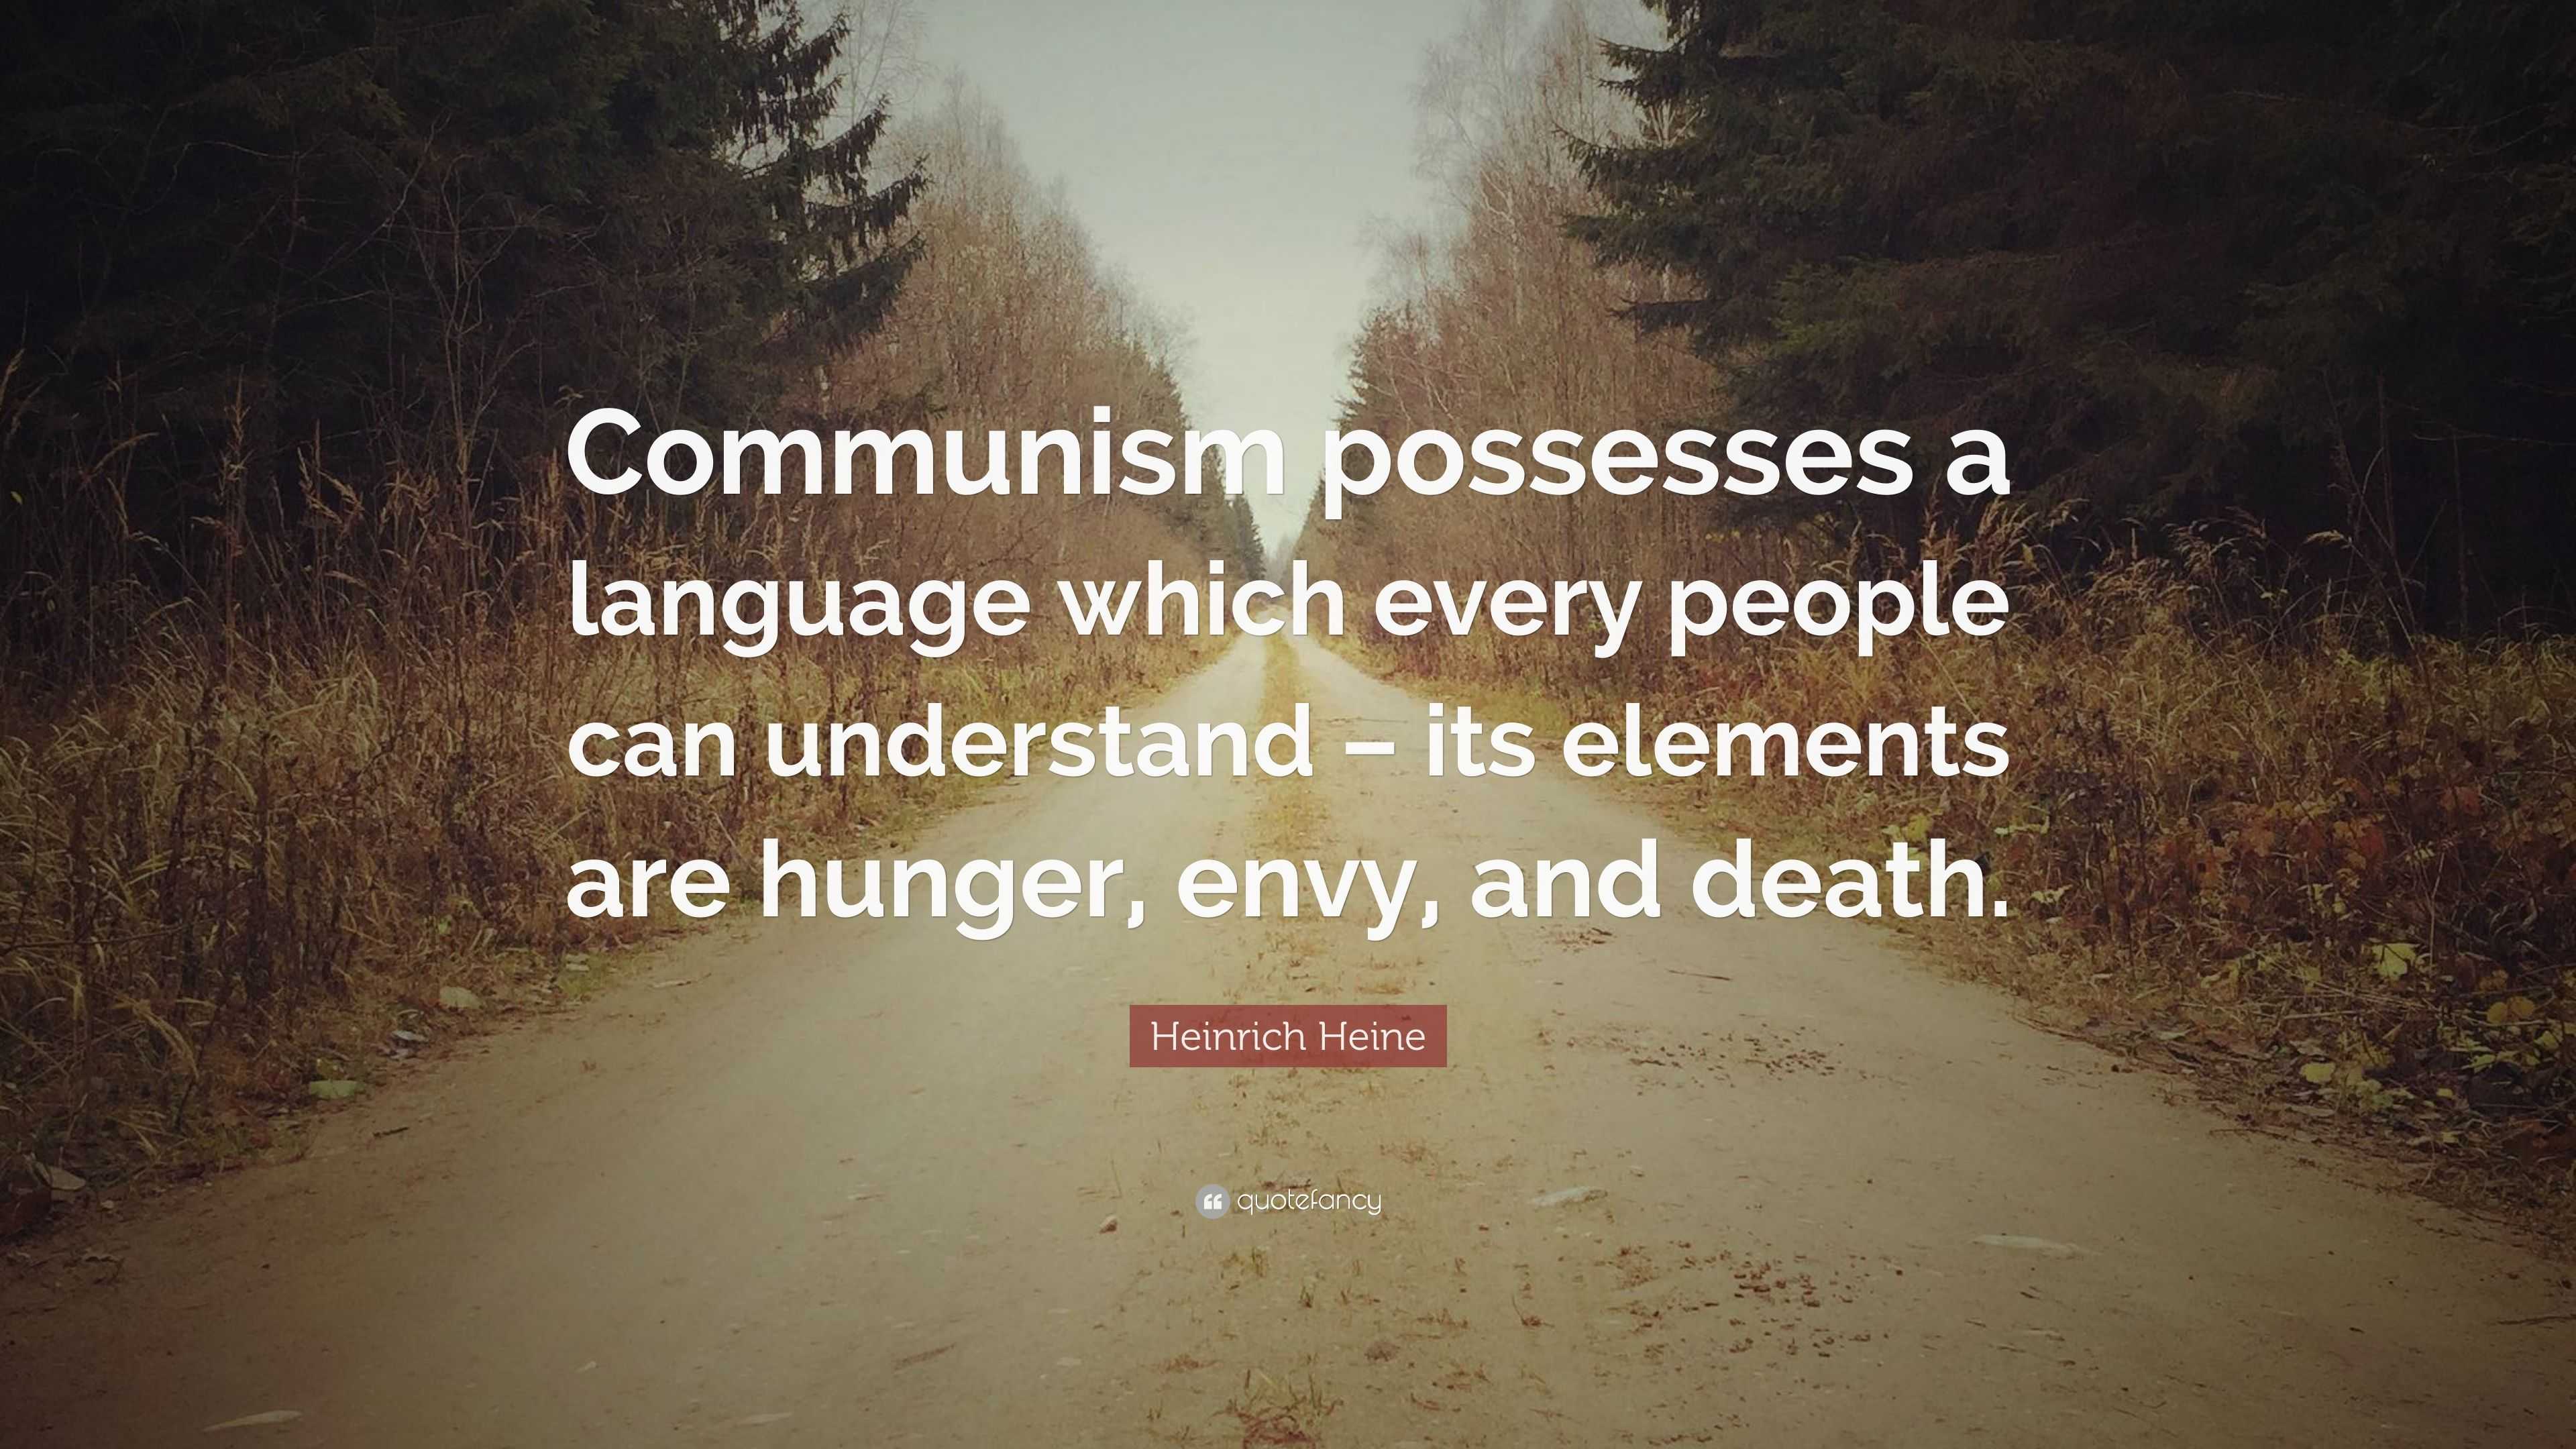 Heinrich Heine Quote: “Communism possesses a language which every